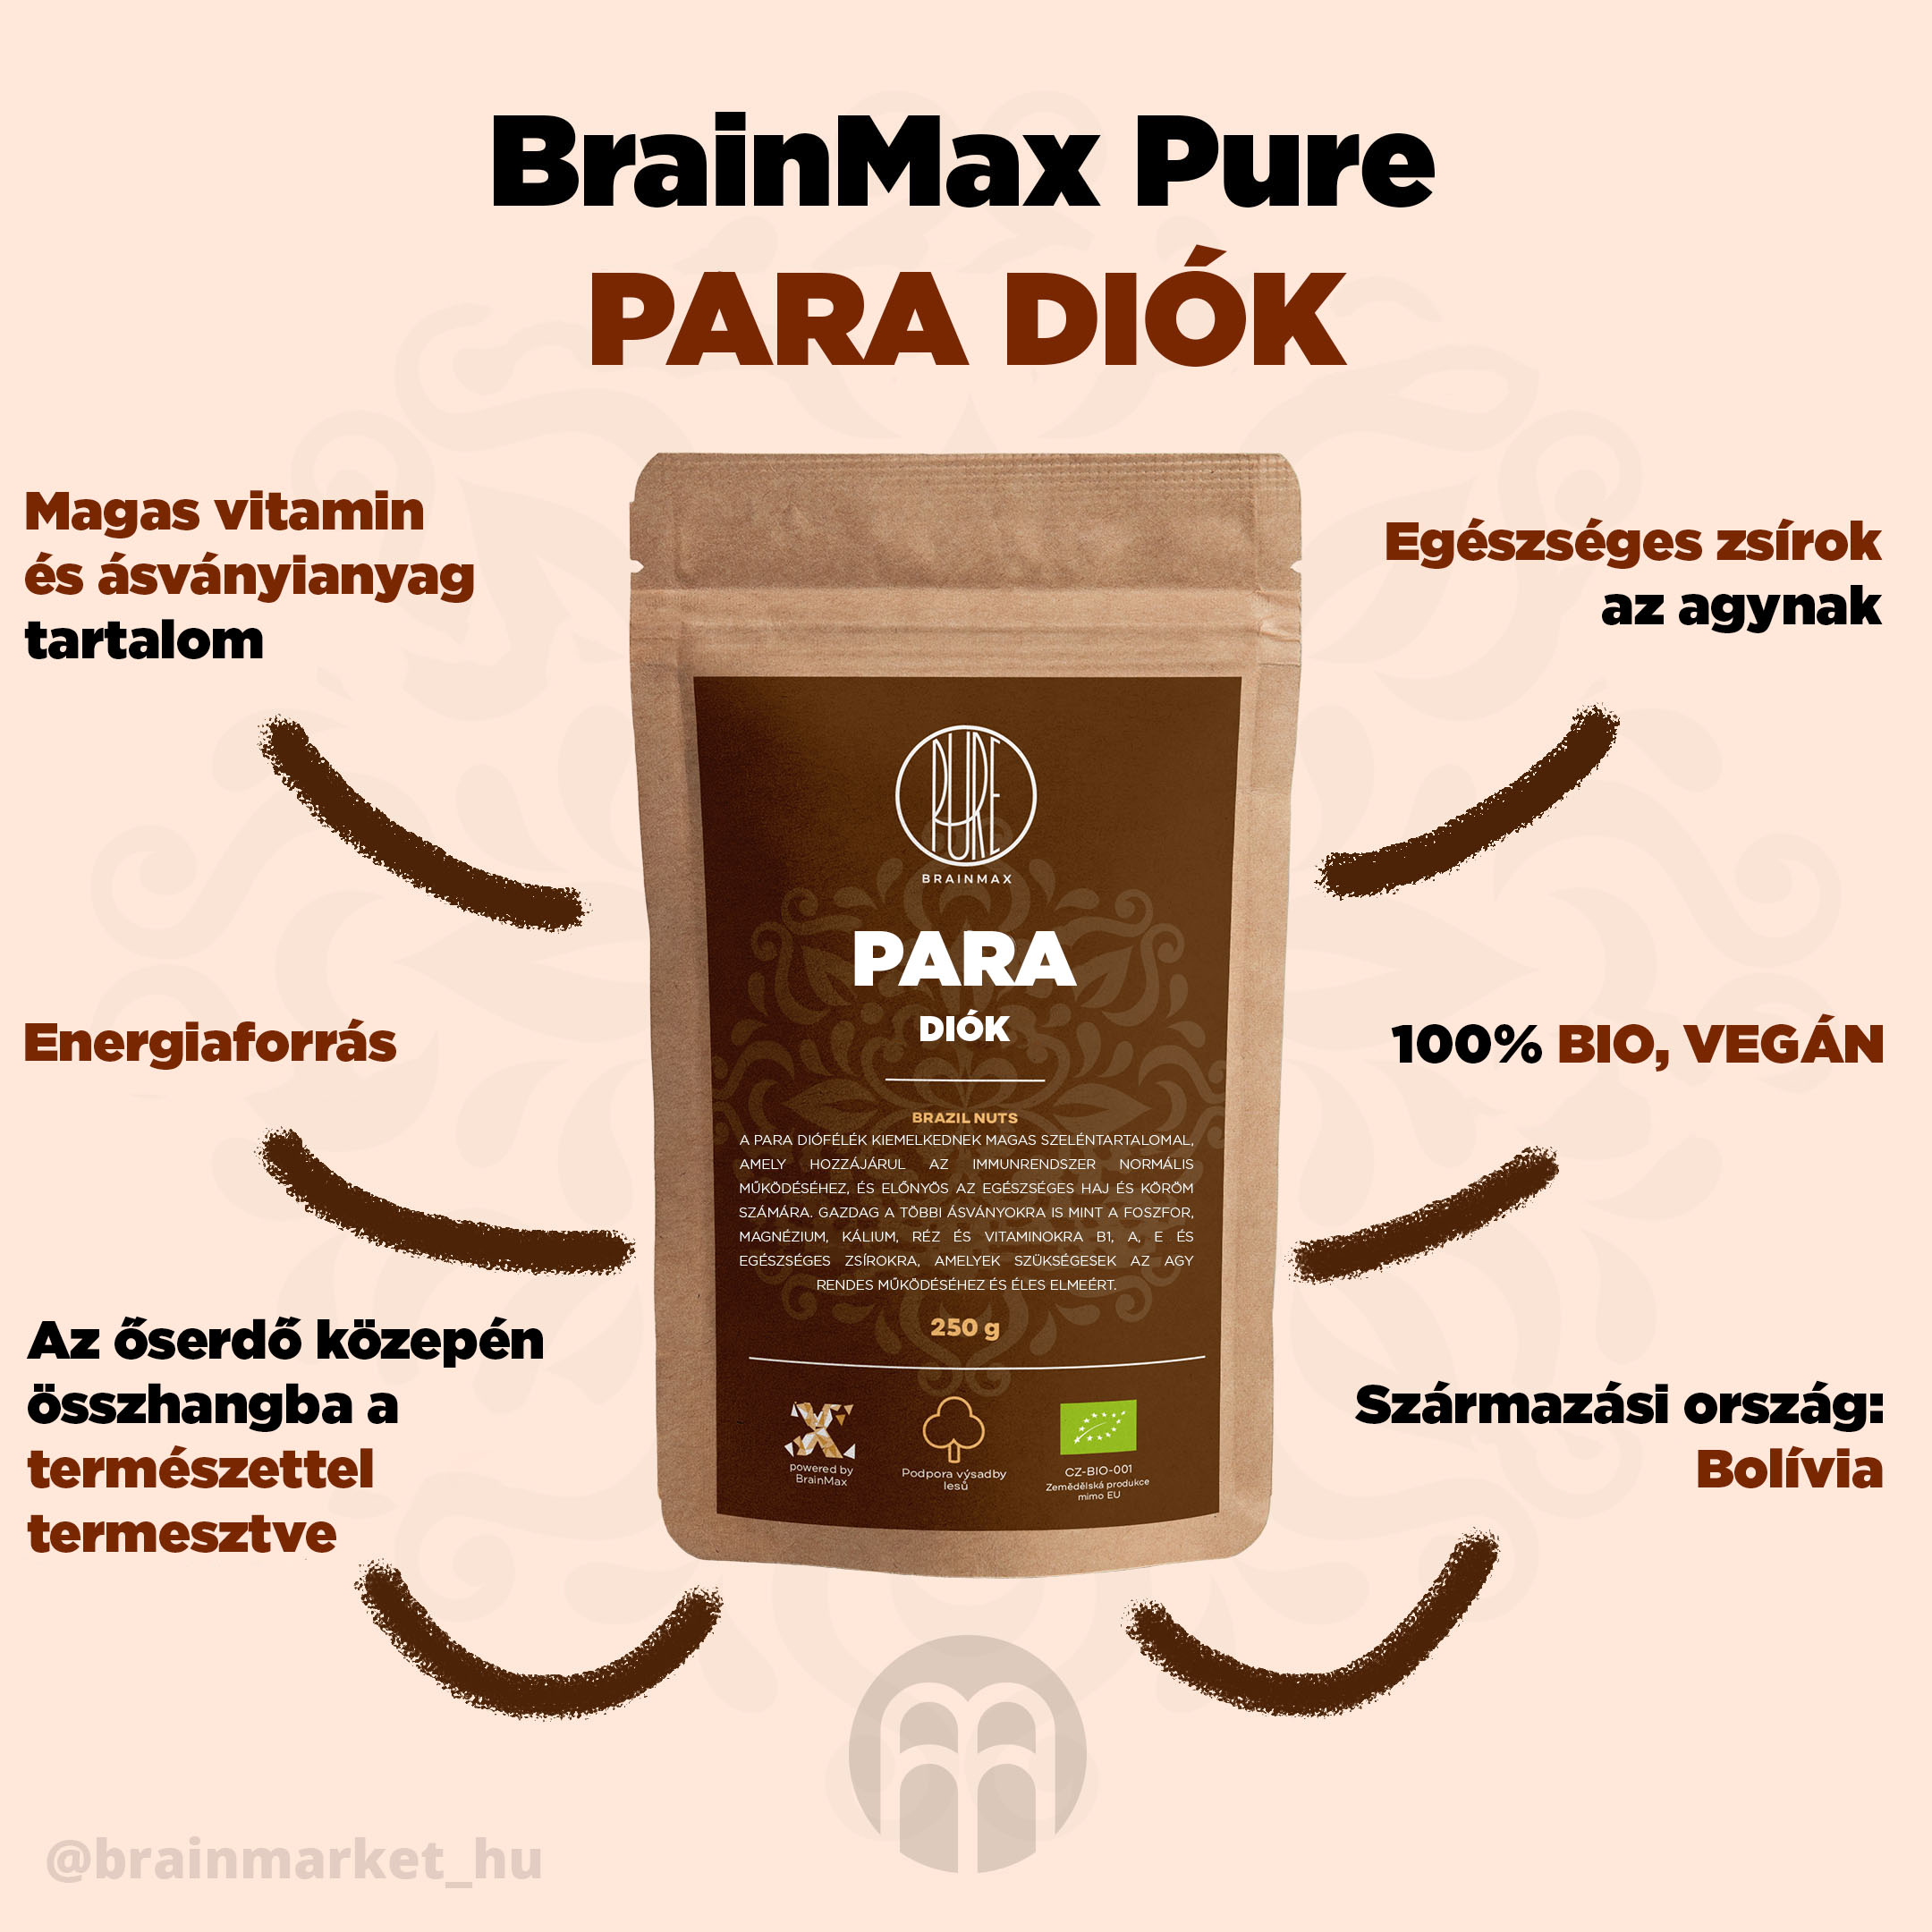 BrainMax Pure Para dió - BrainMarket.cz